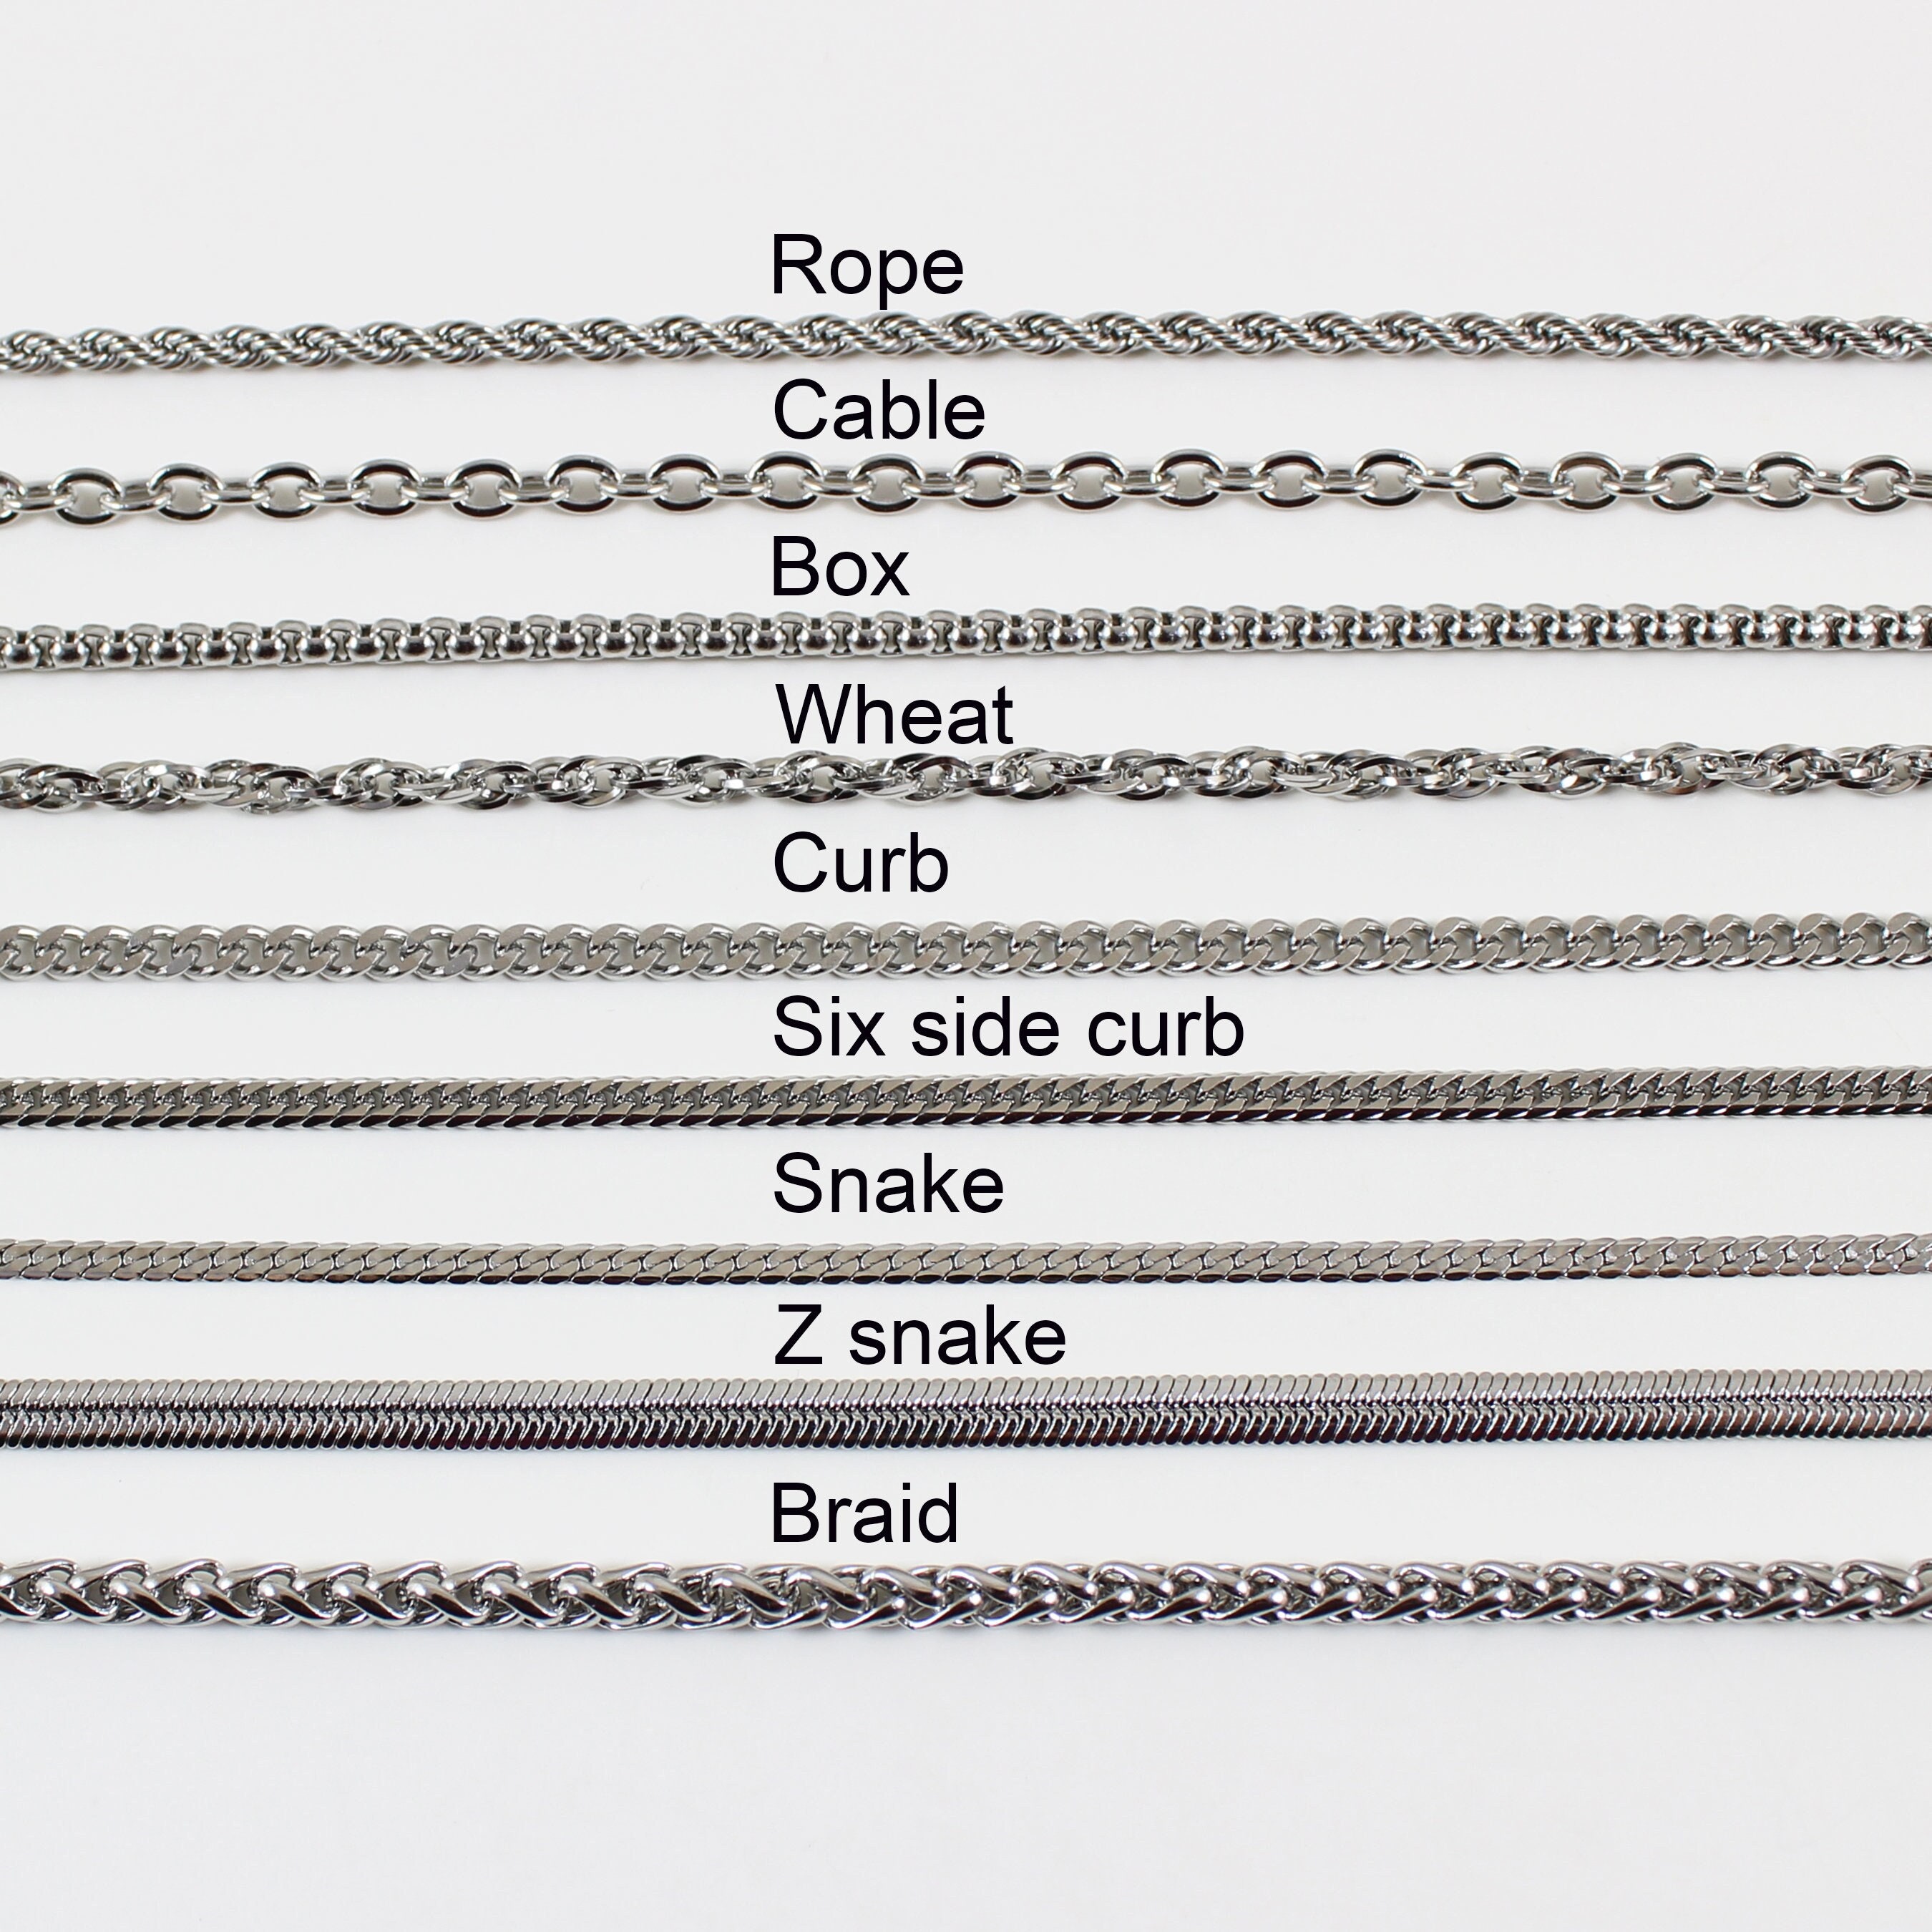 Box Chain, 4mm, Stainless Steel Venetian Chain, Bulk Jewelry Making Chain,  Lot Size 2 to 10 Feet, 1949-4 